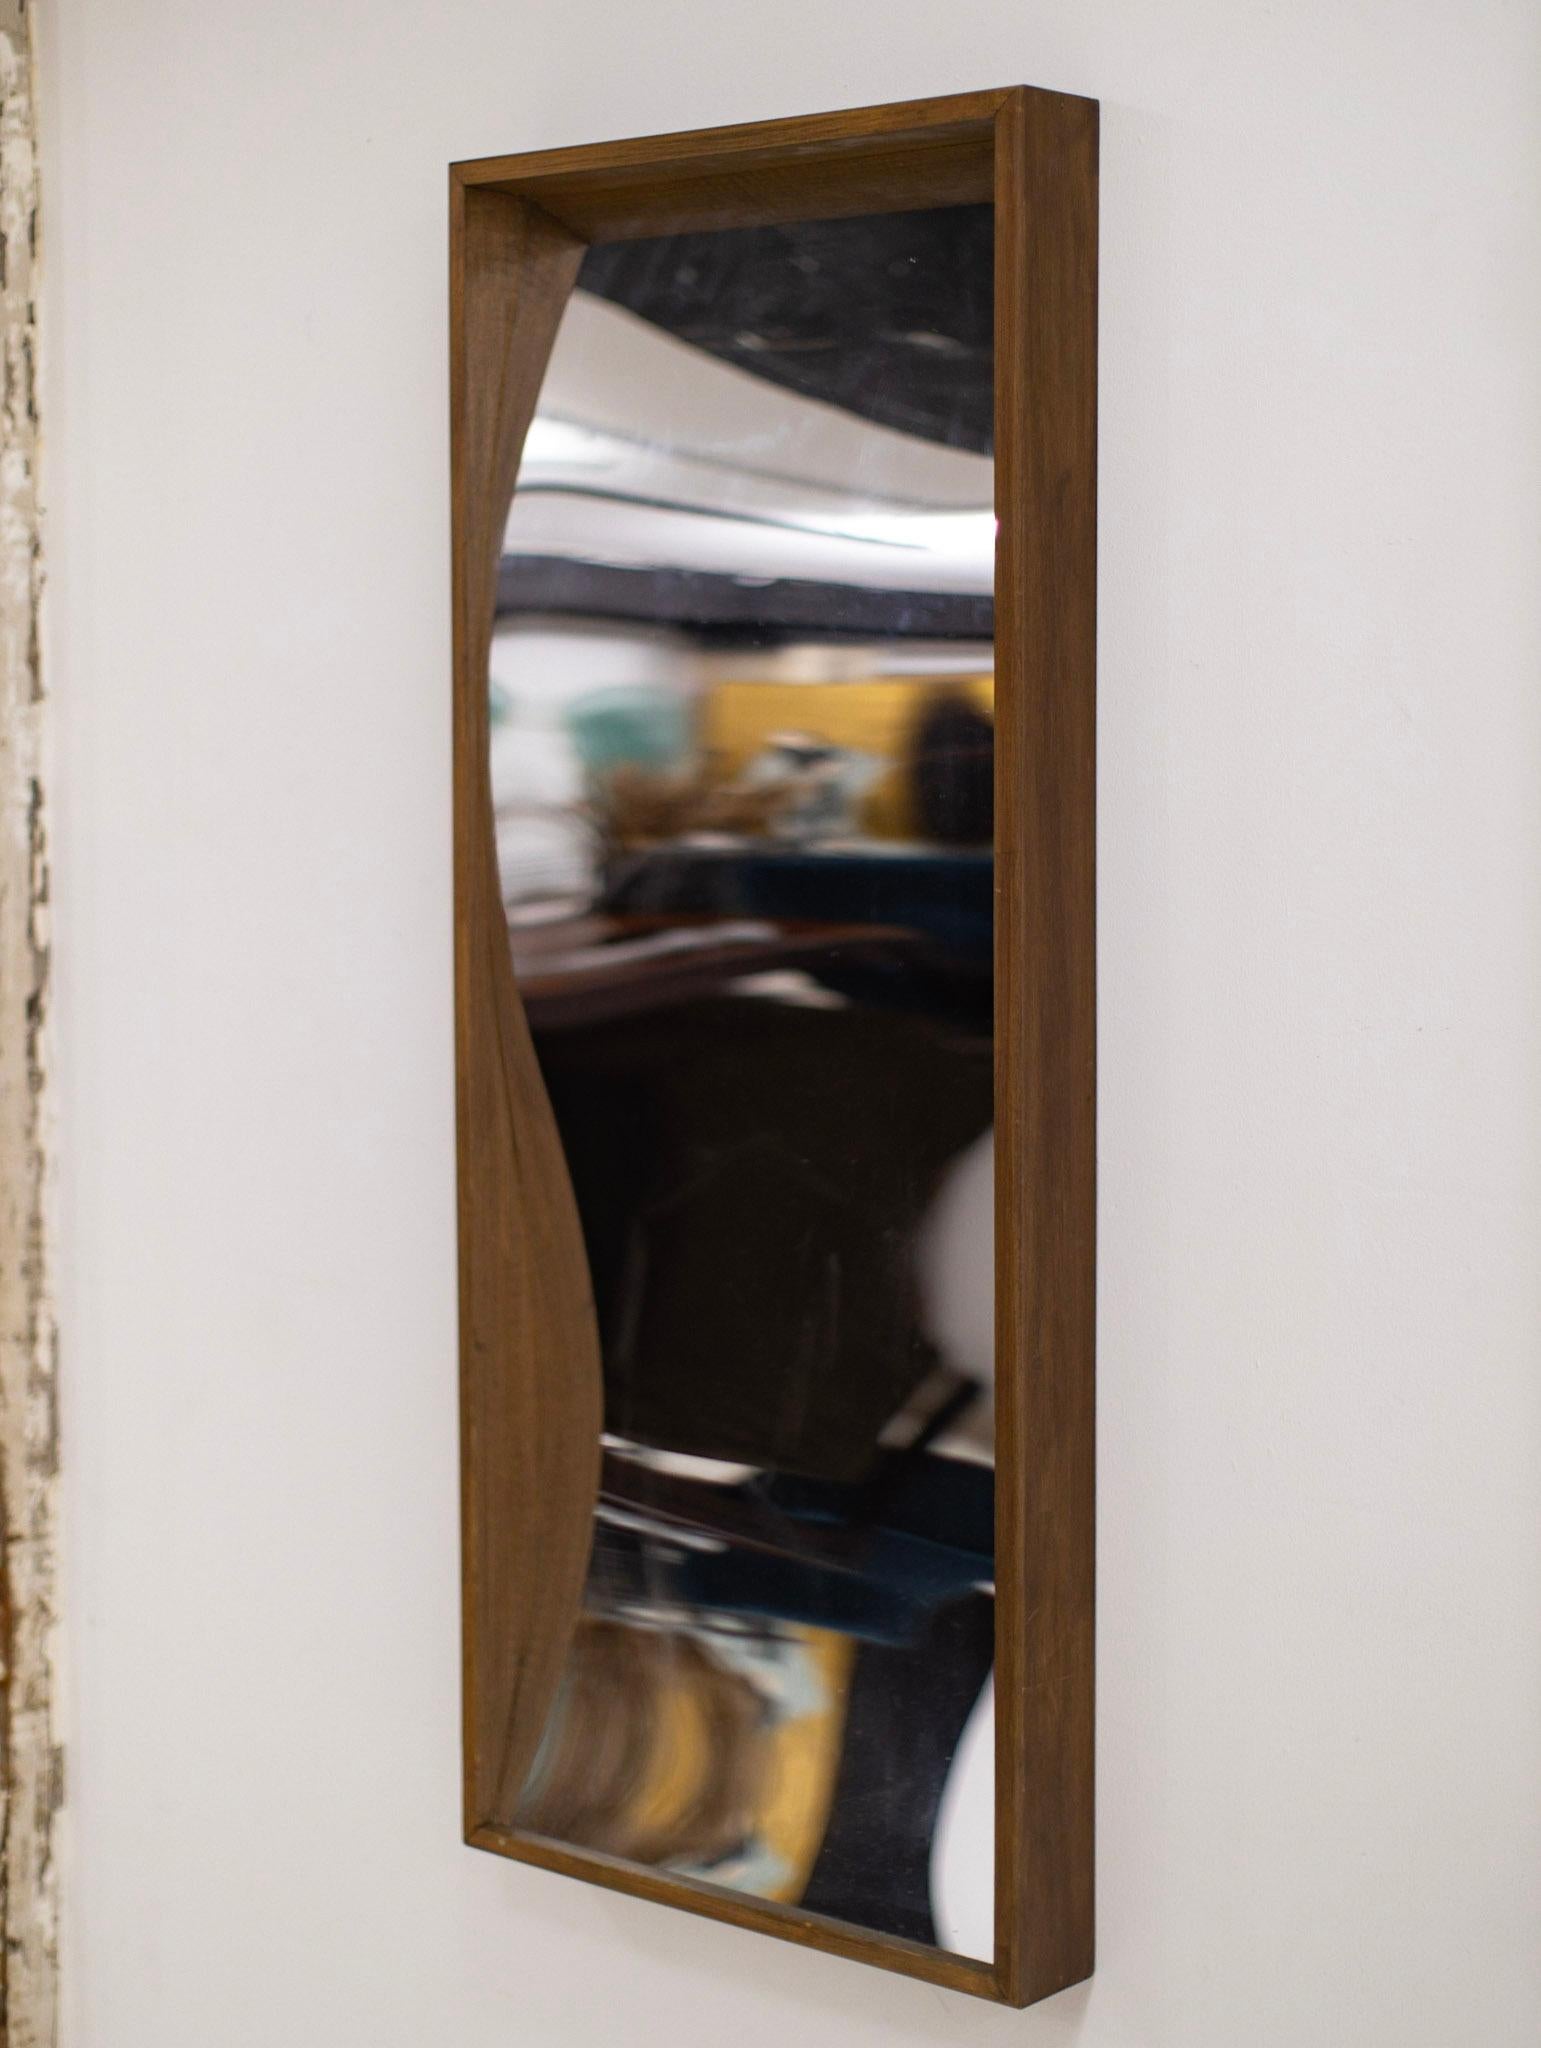 Mid century distortion mirror. Wood frame. Plastic mirror warps to create a distorted effect.